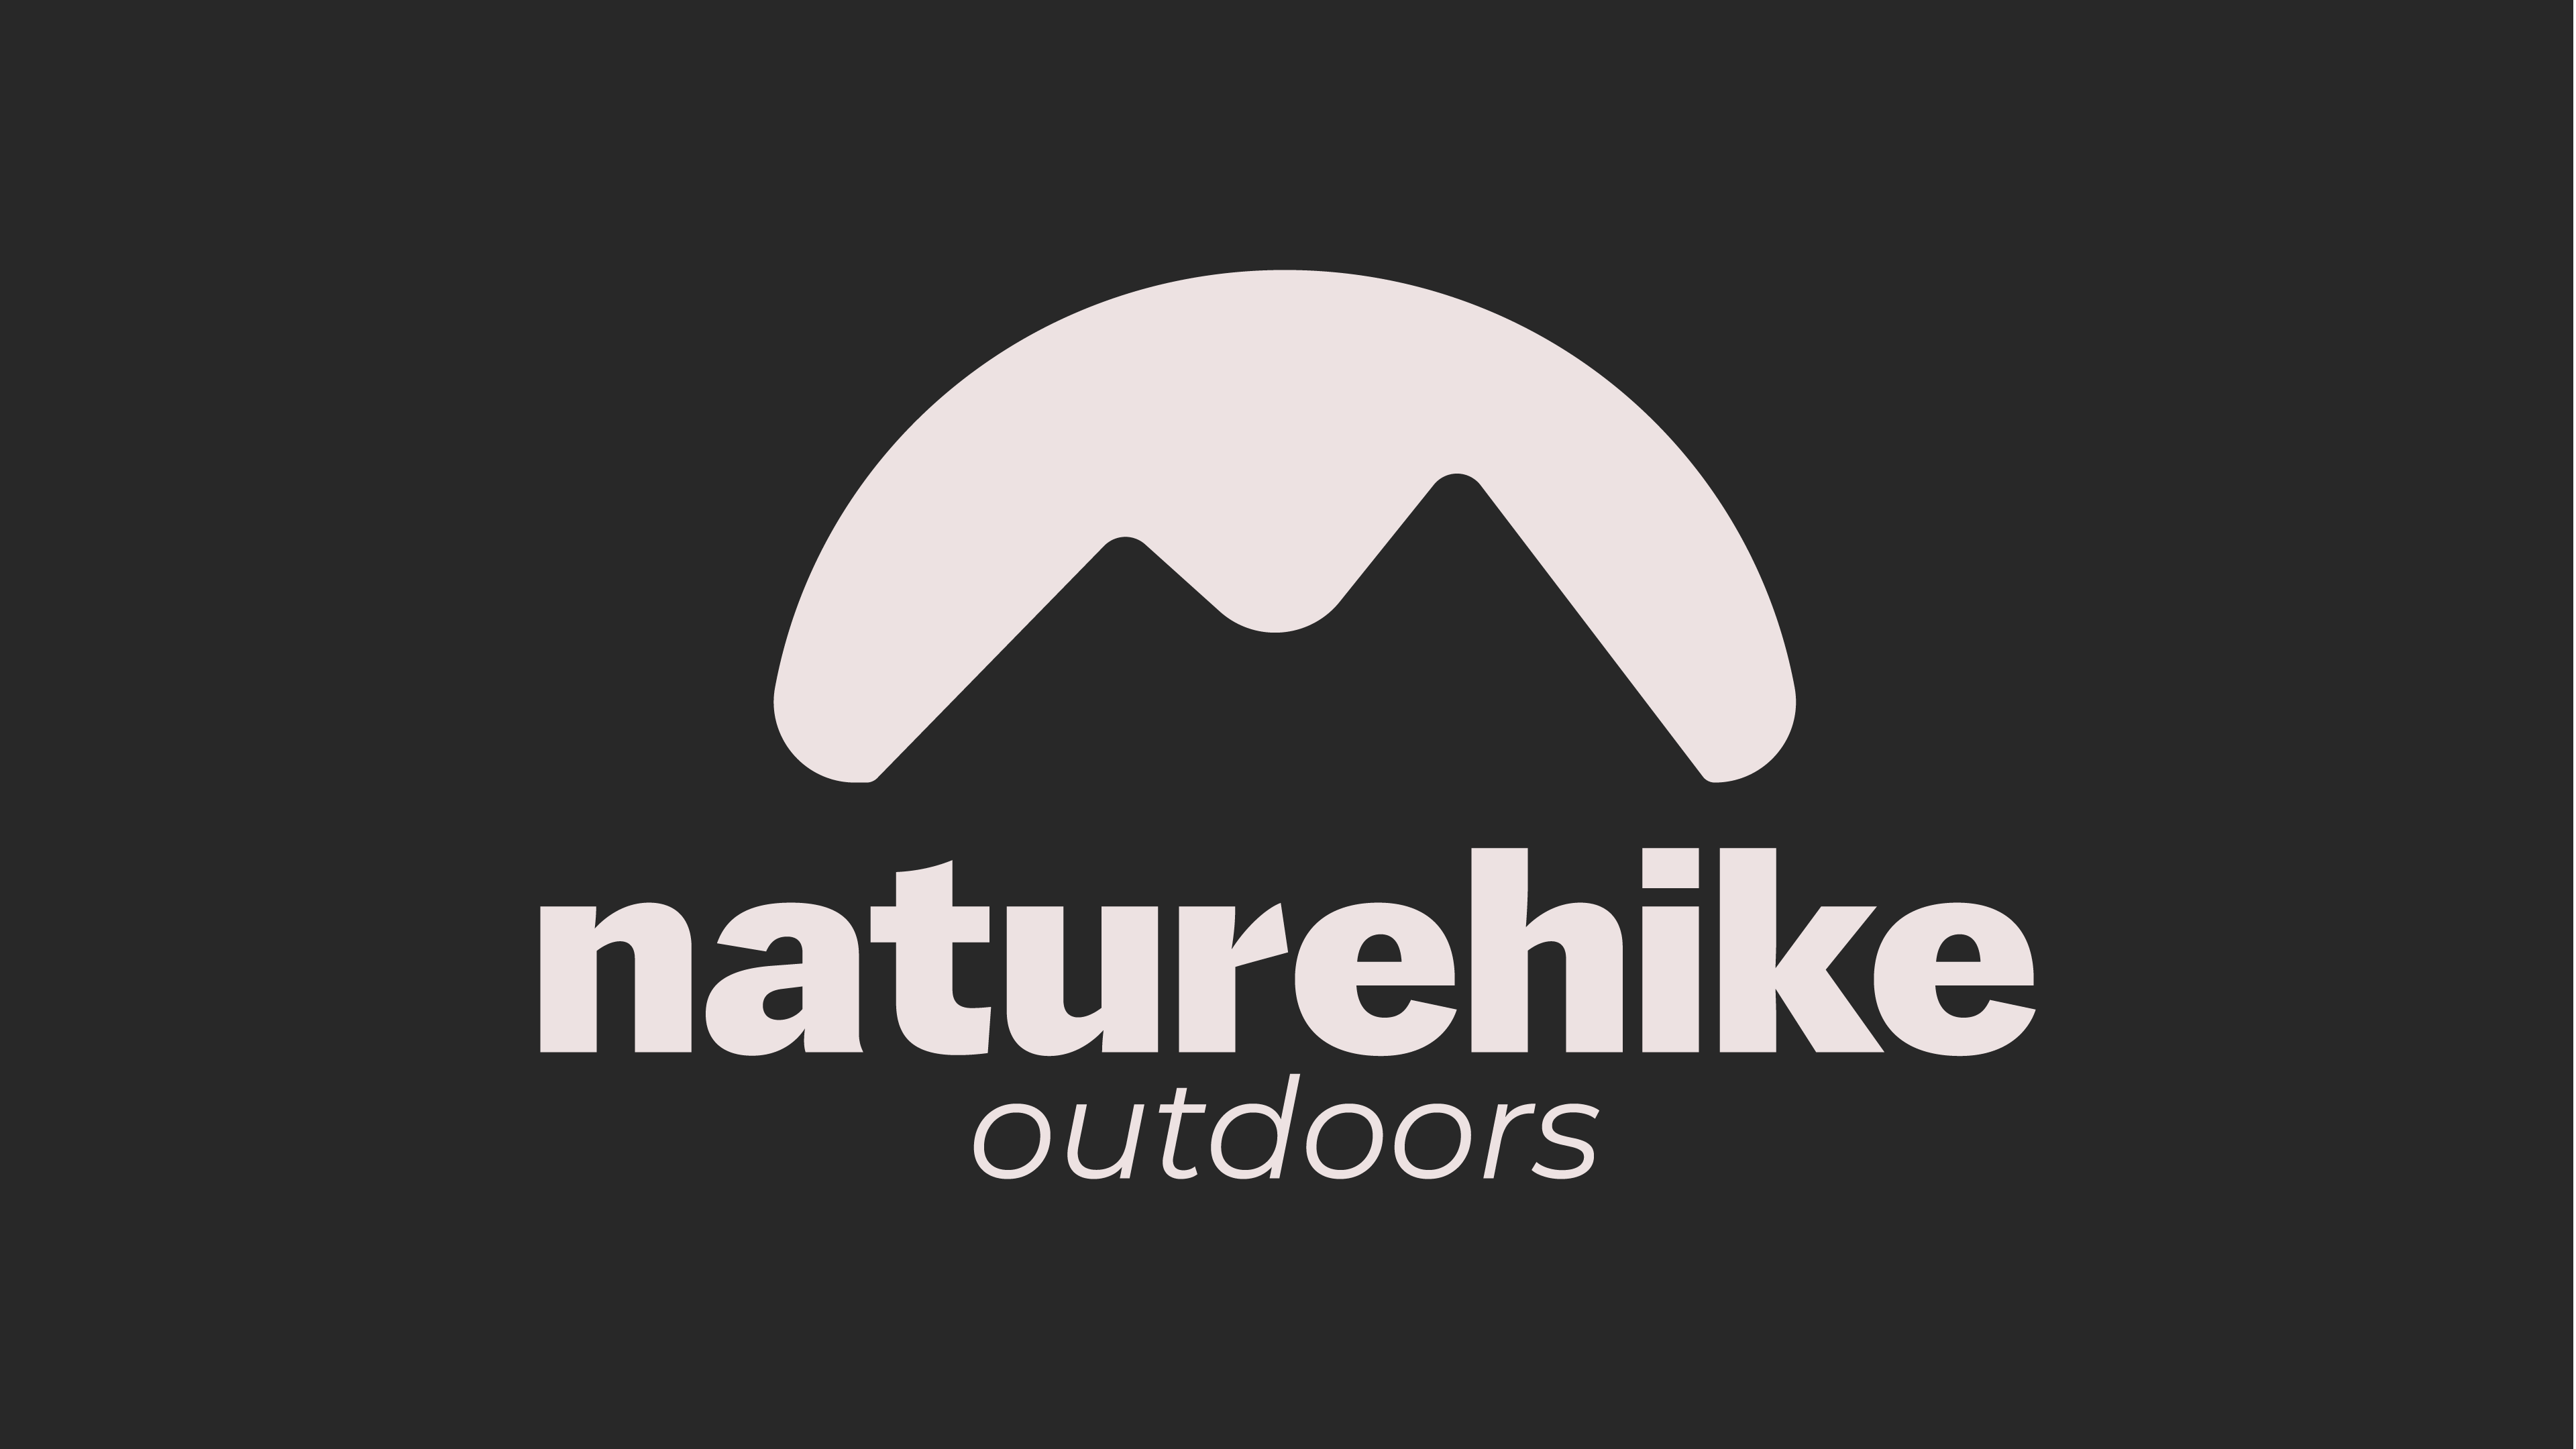 Naturehike concept logo by Andrew Horishnyi on Dribbble